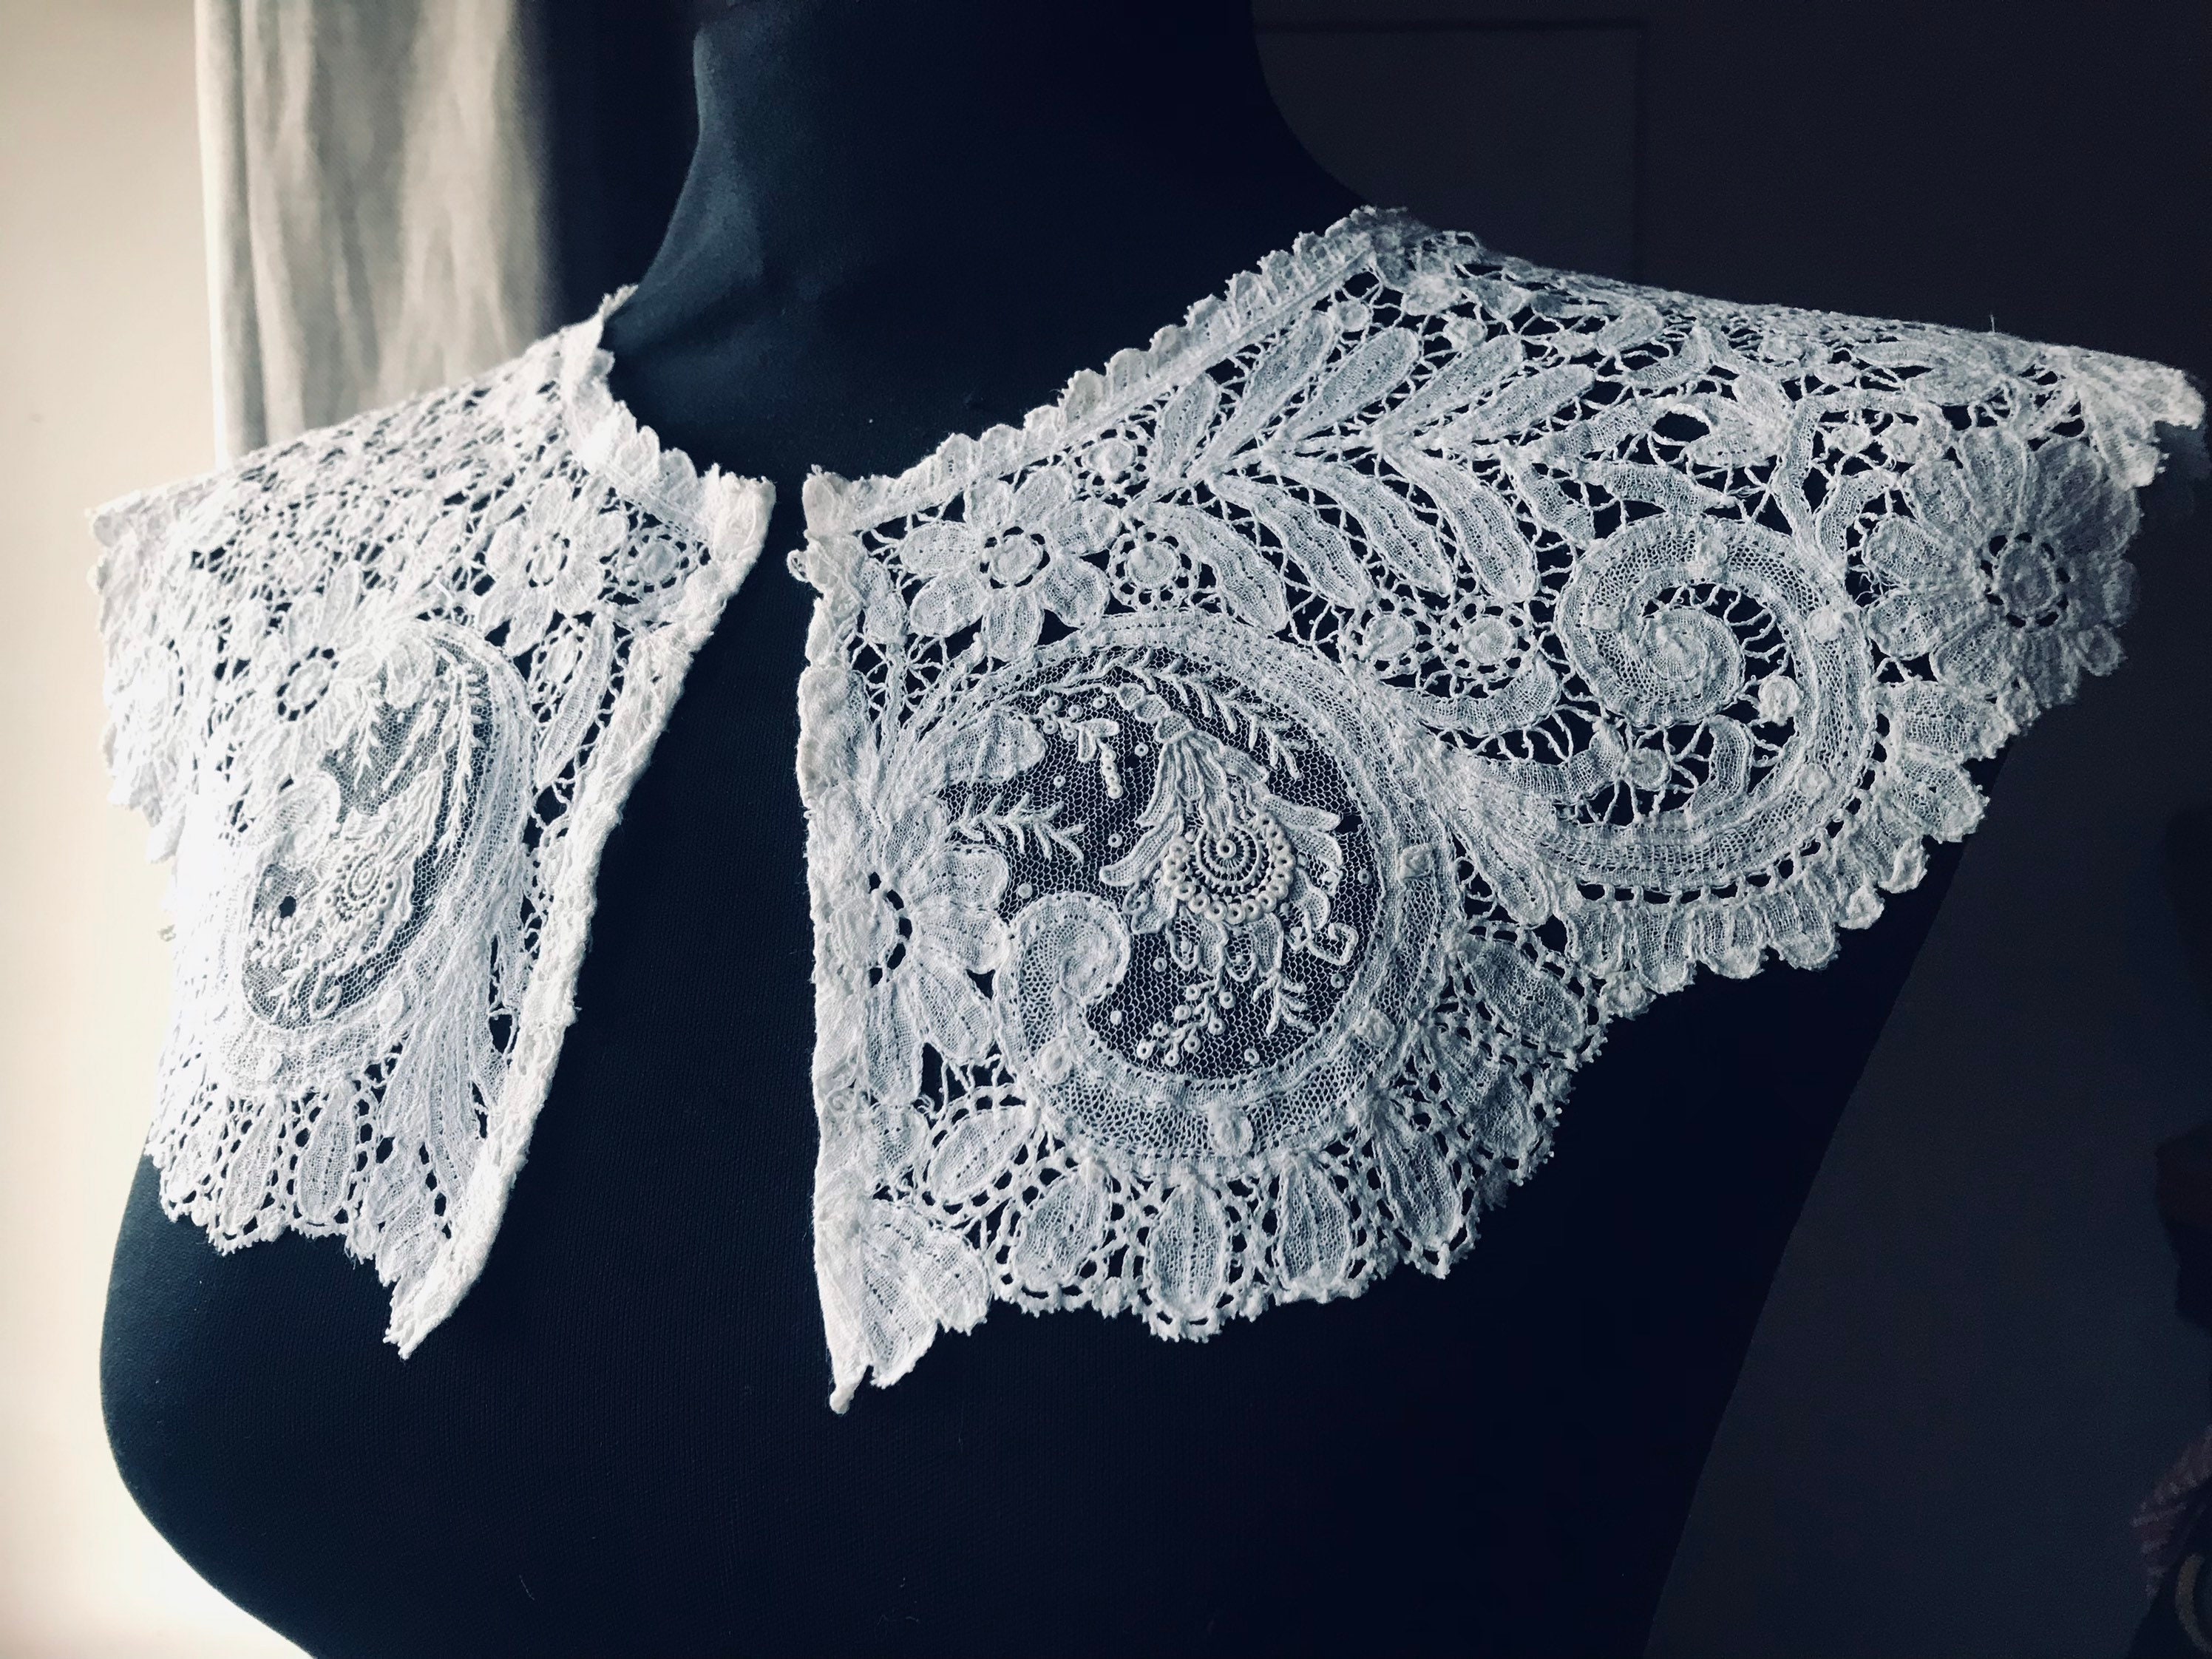 Antique Lace Collar Vintage Dimensional Irish Crochet Lace Bertha Collar  Dress Front Handmade Lace 